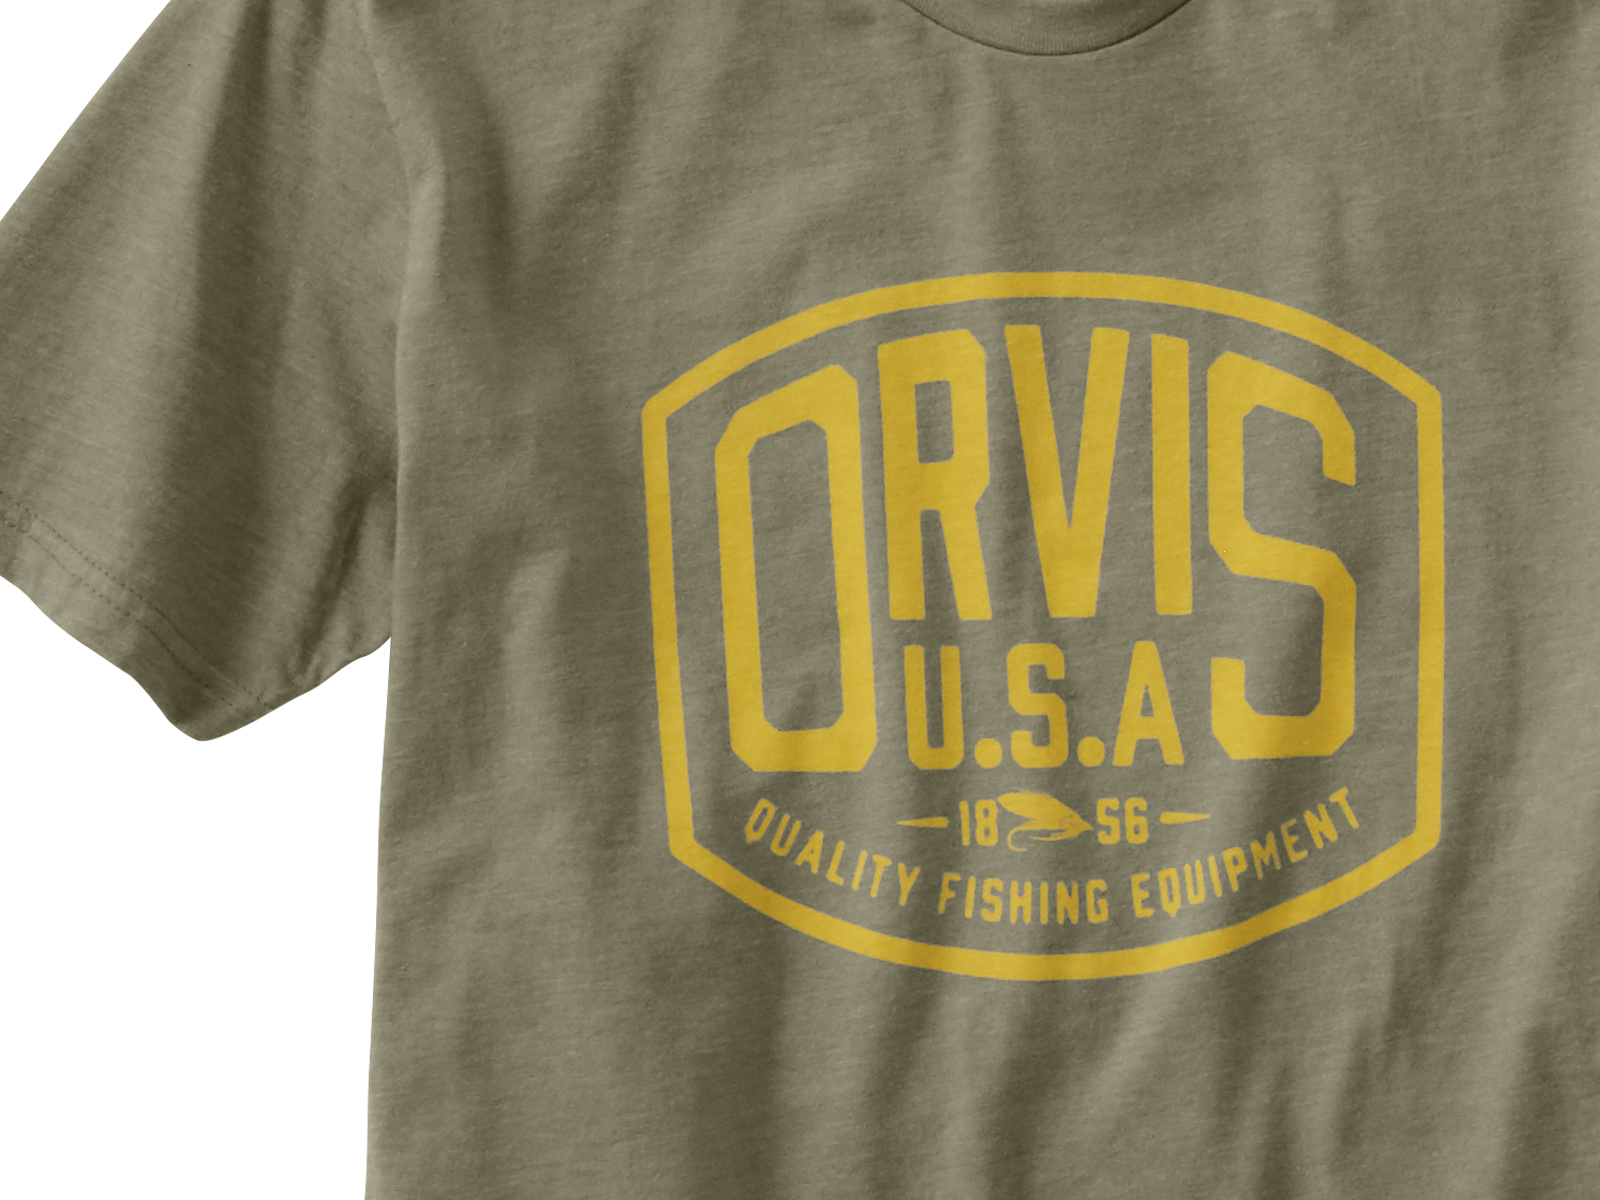 Orvis T-shirt by Gregory Allen on Dribbble